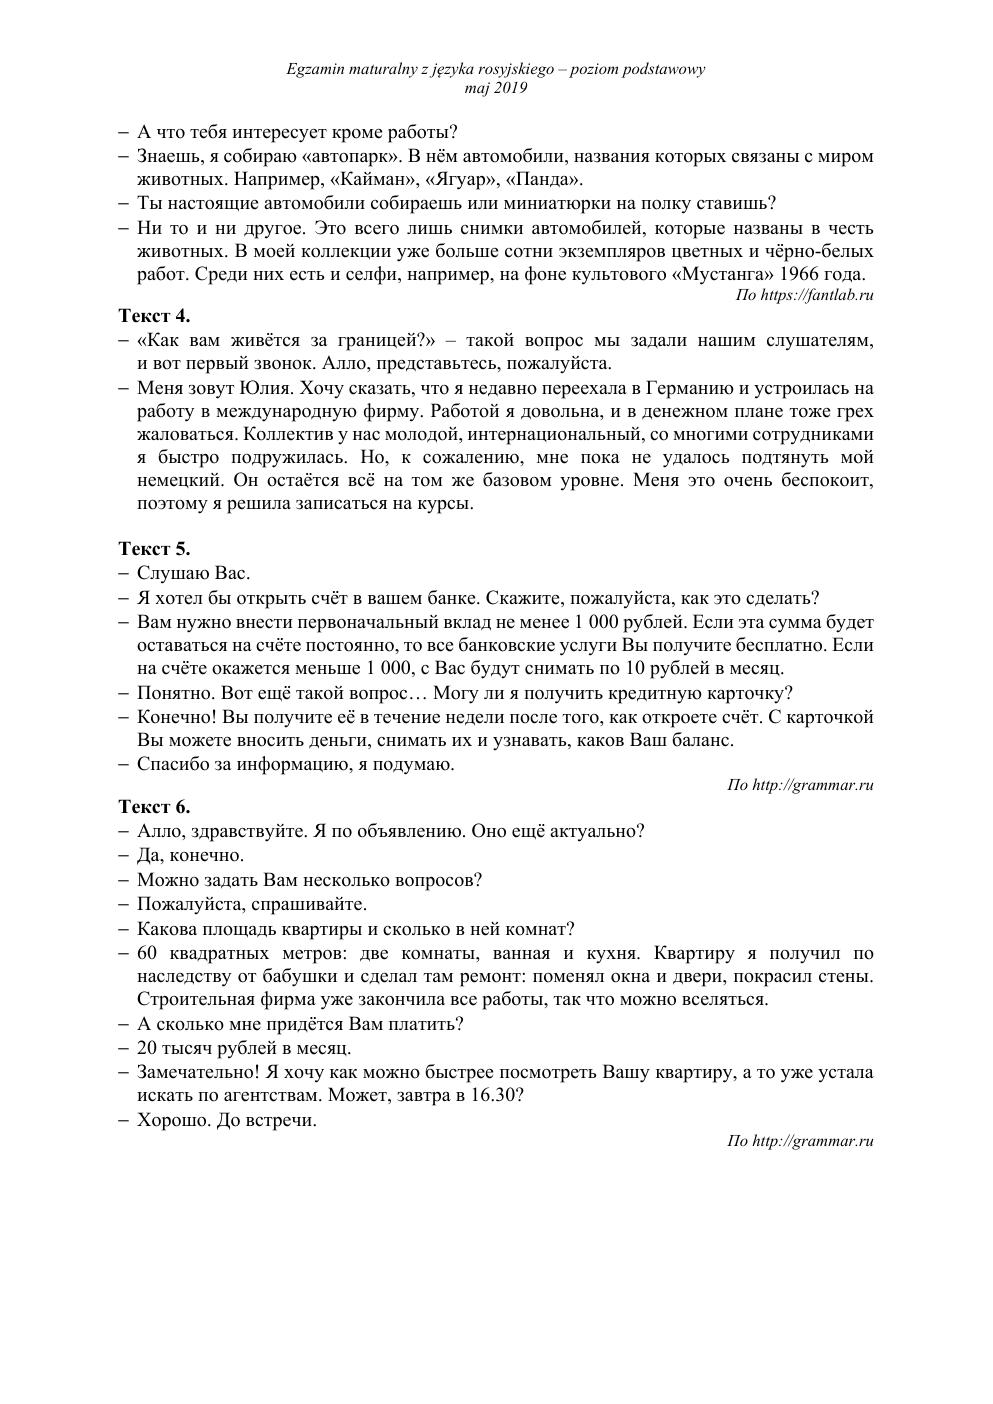 matura-2019-jezyk-rosyjski-podstawowy-transkrypcja-3